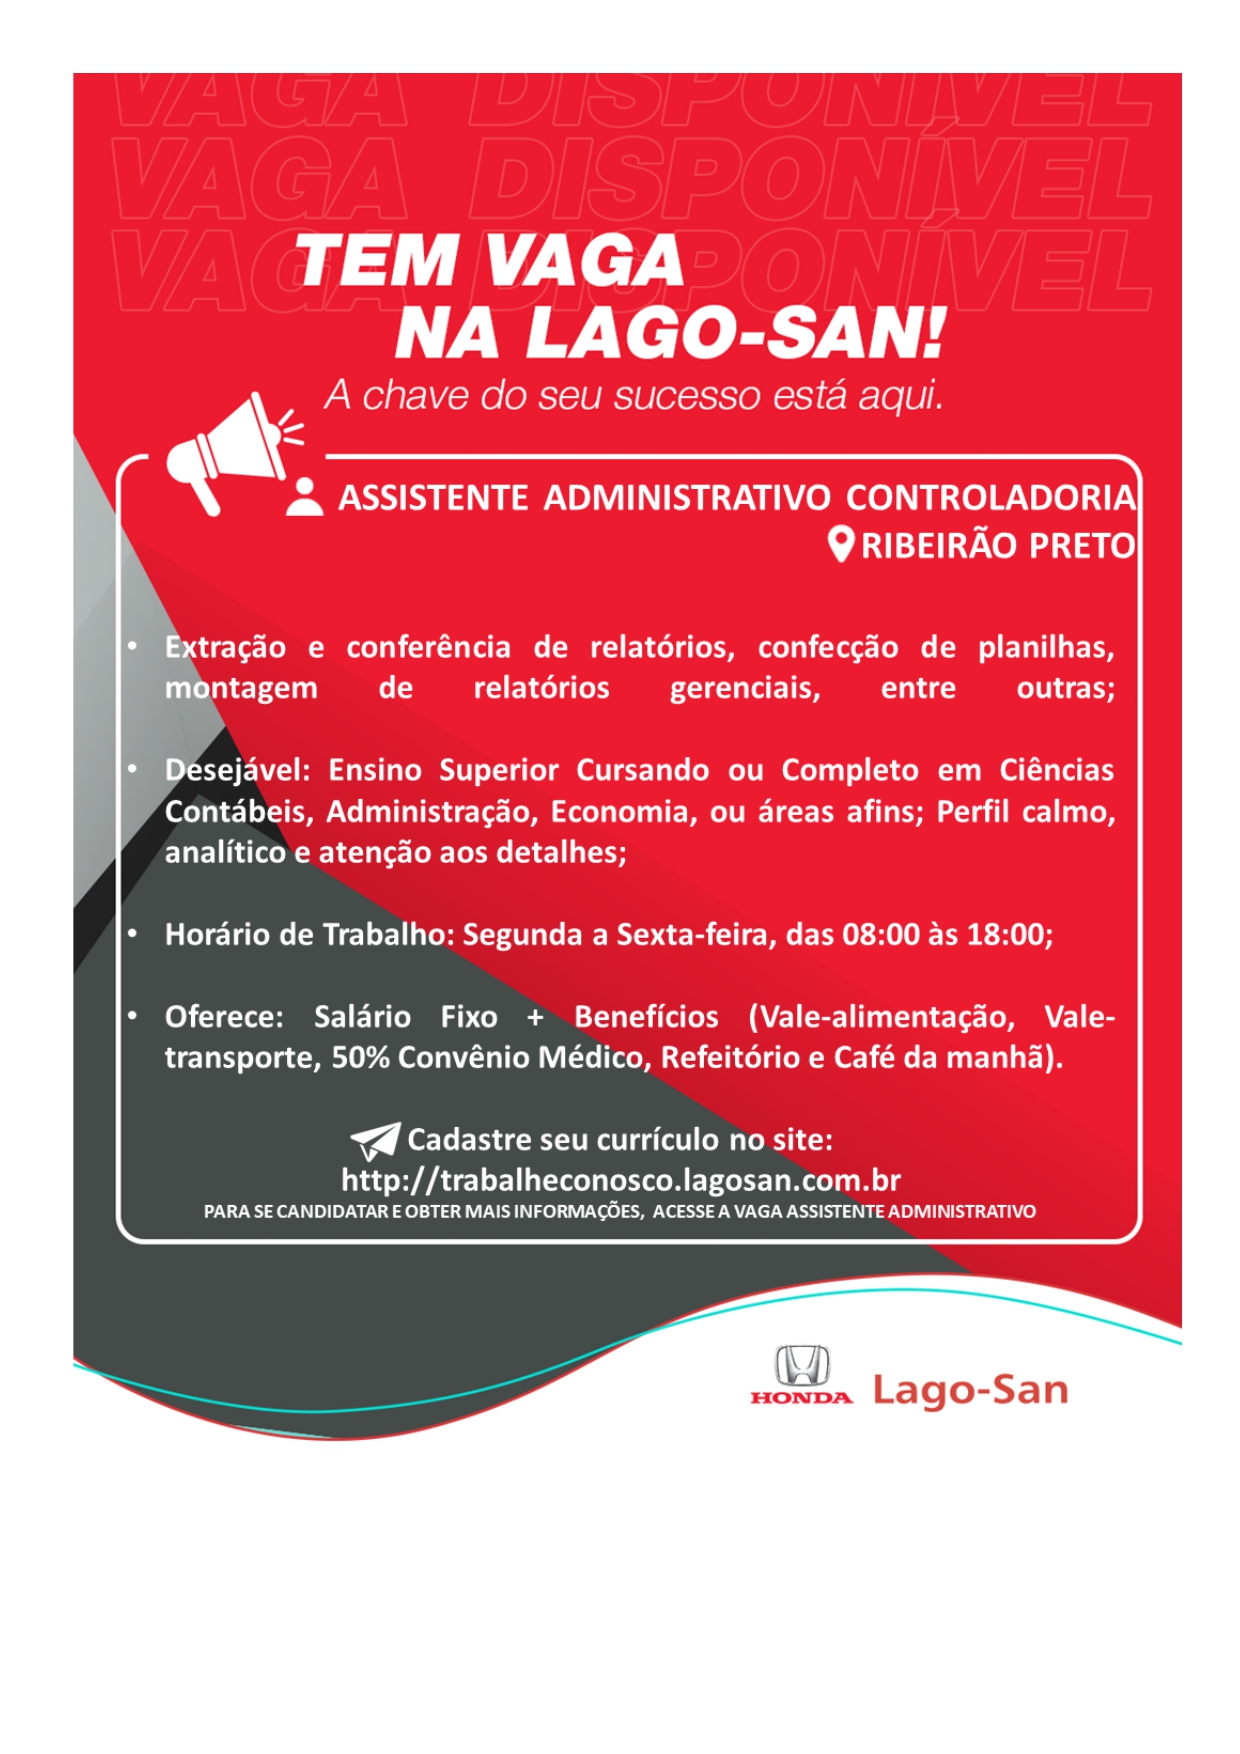 Lago-San_-_Assist._Adm._Controladoria_page-0001.jpg